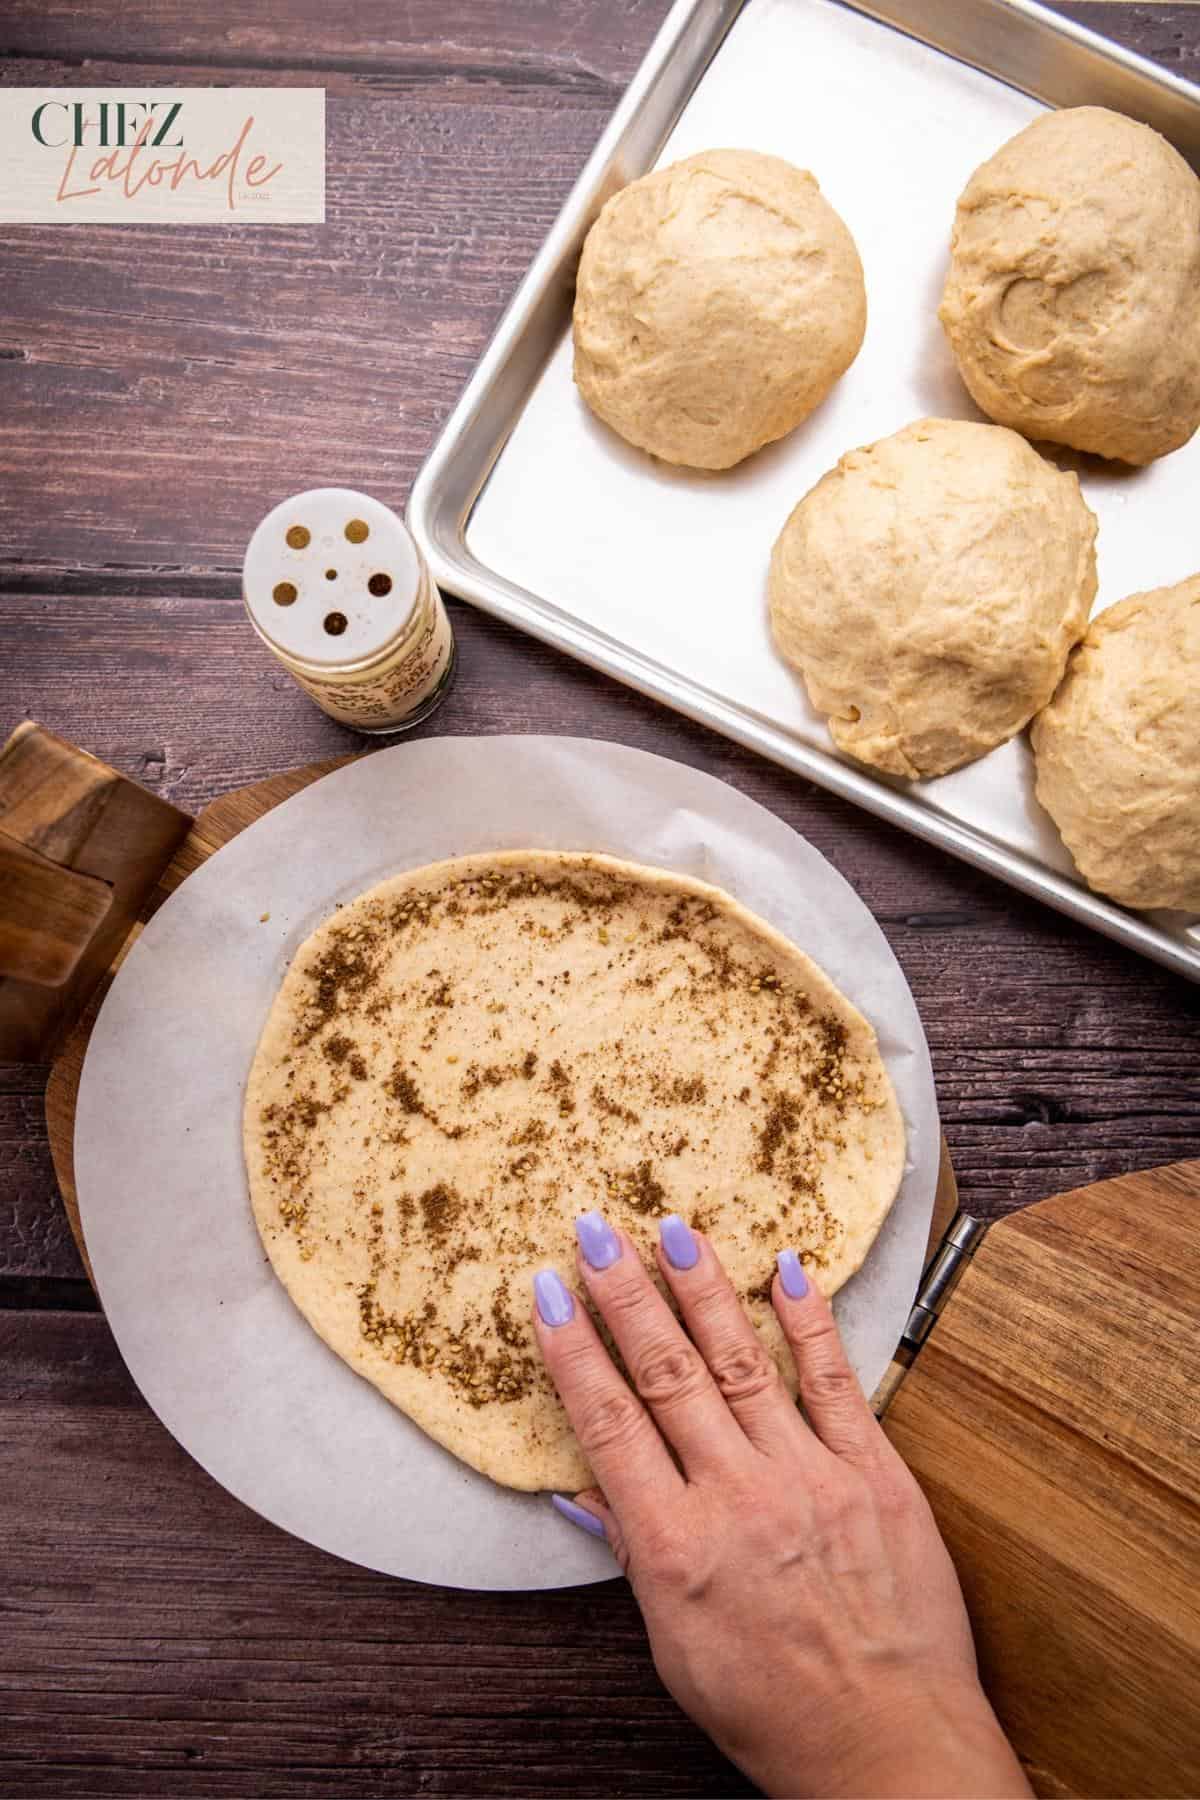 Using my hand to press down the Za'atar seasoning on the dough.